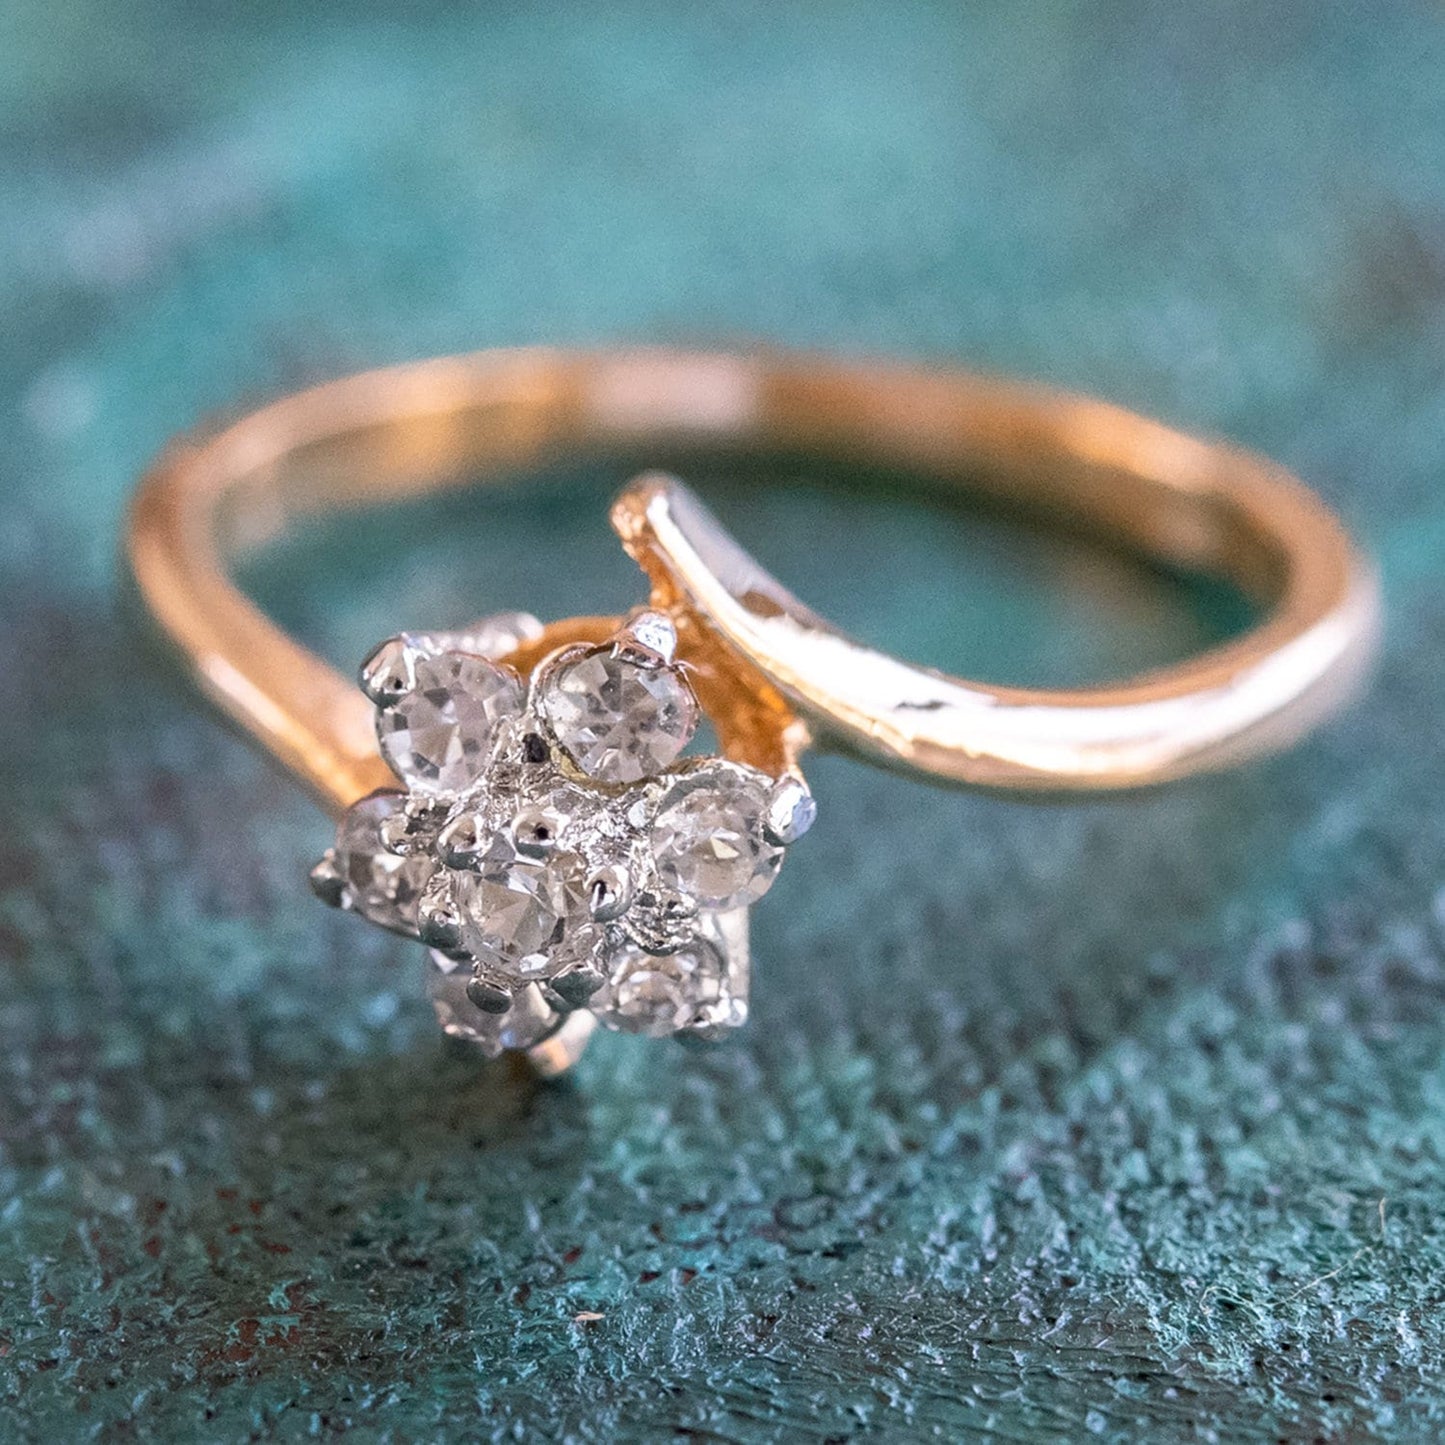 Vintage Ring Jewelry Clear Swarovski Crystal Flower Motif Cocktail Ring 18k Gold R1766 Size: 5